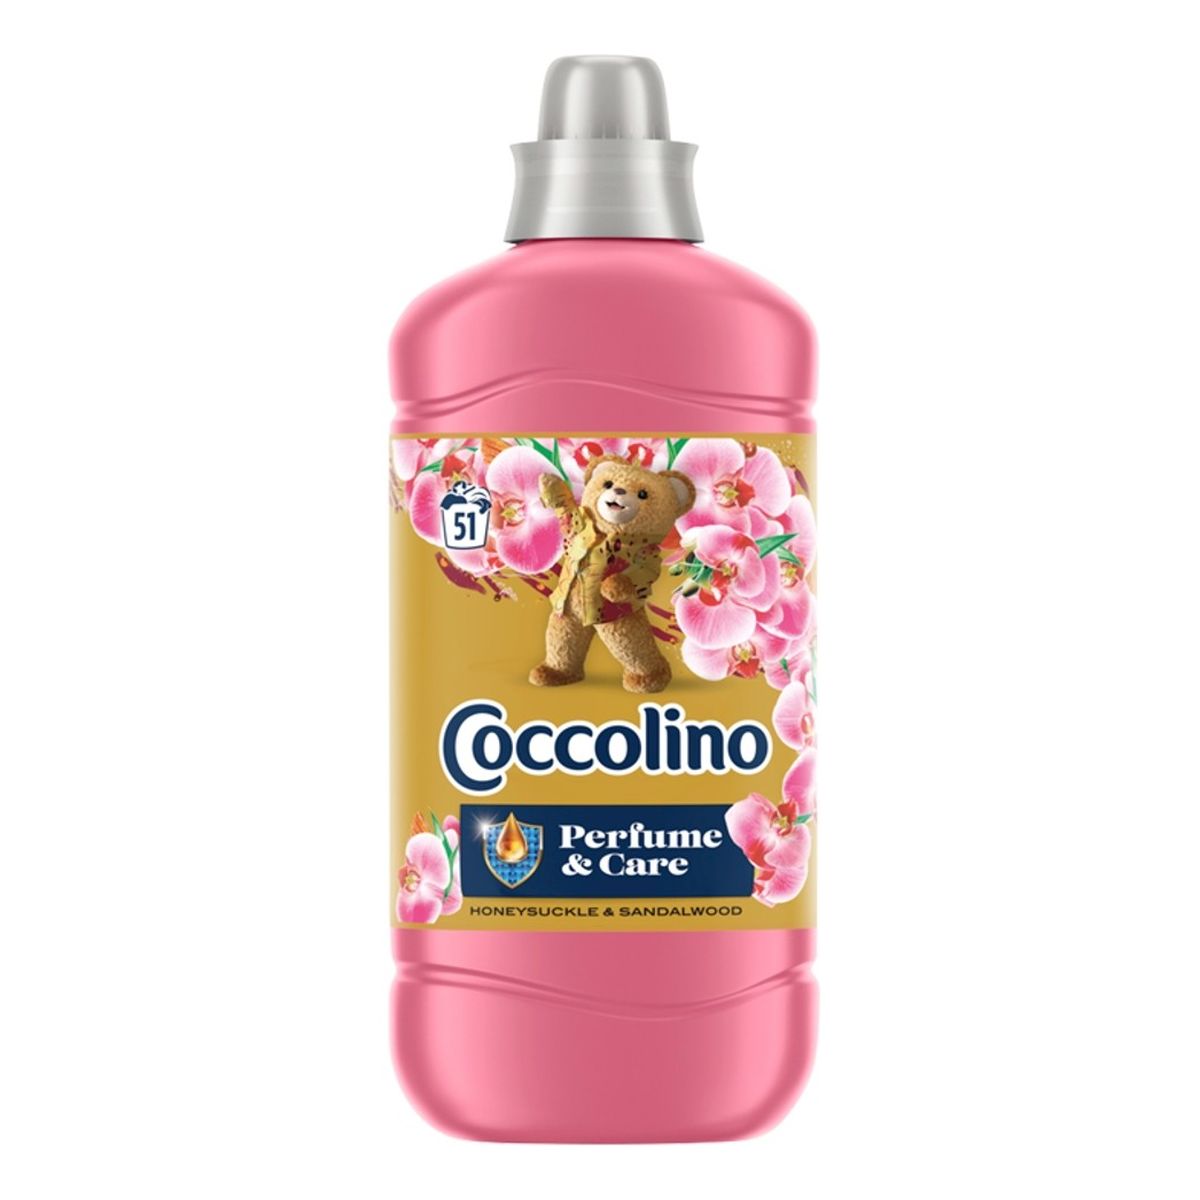 Coccolino Perfume & Care Płyn do płukania tkanin Honeysuckle&Sandalwood (51 prań) 1275ml